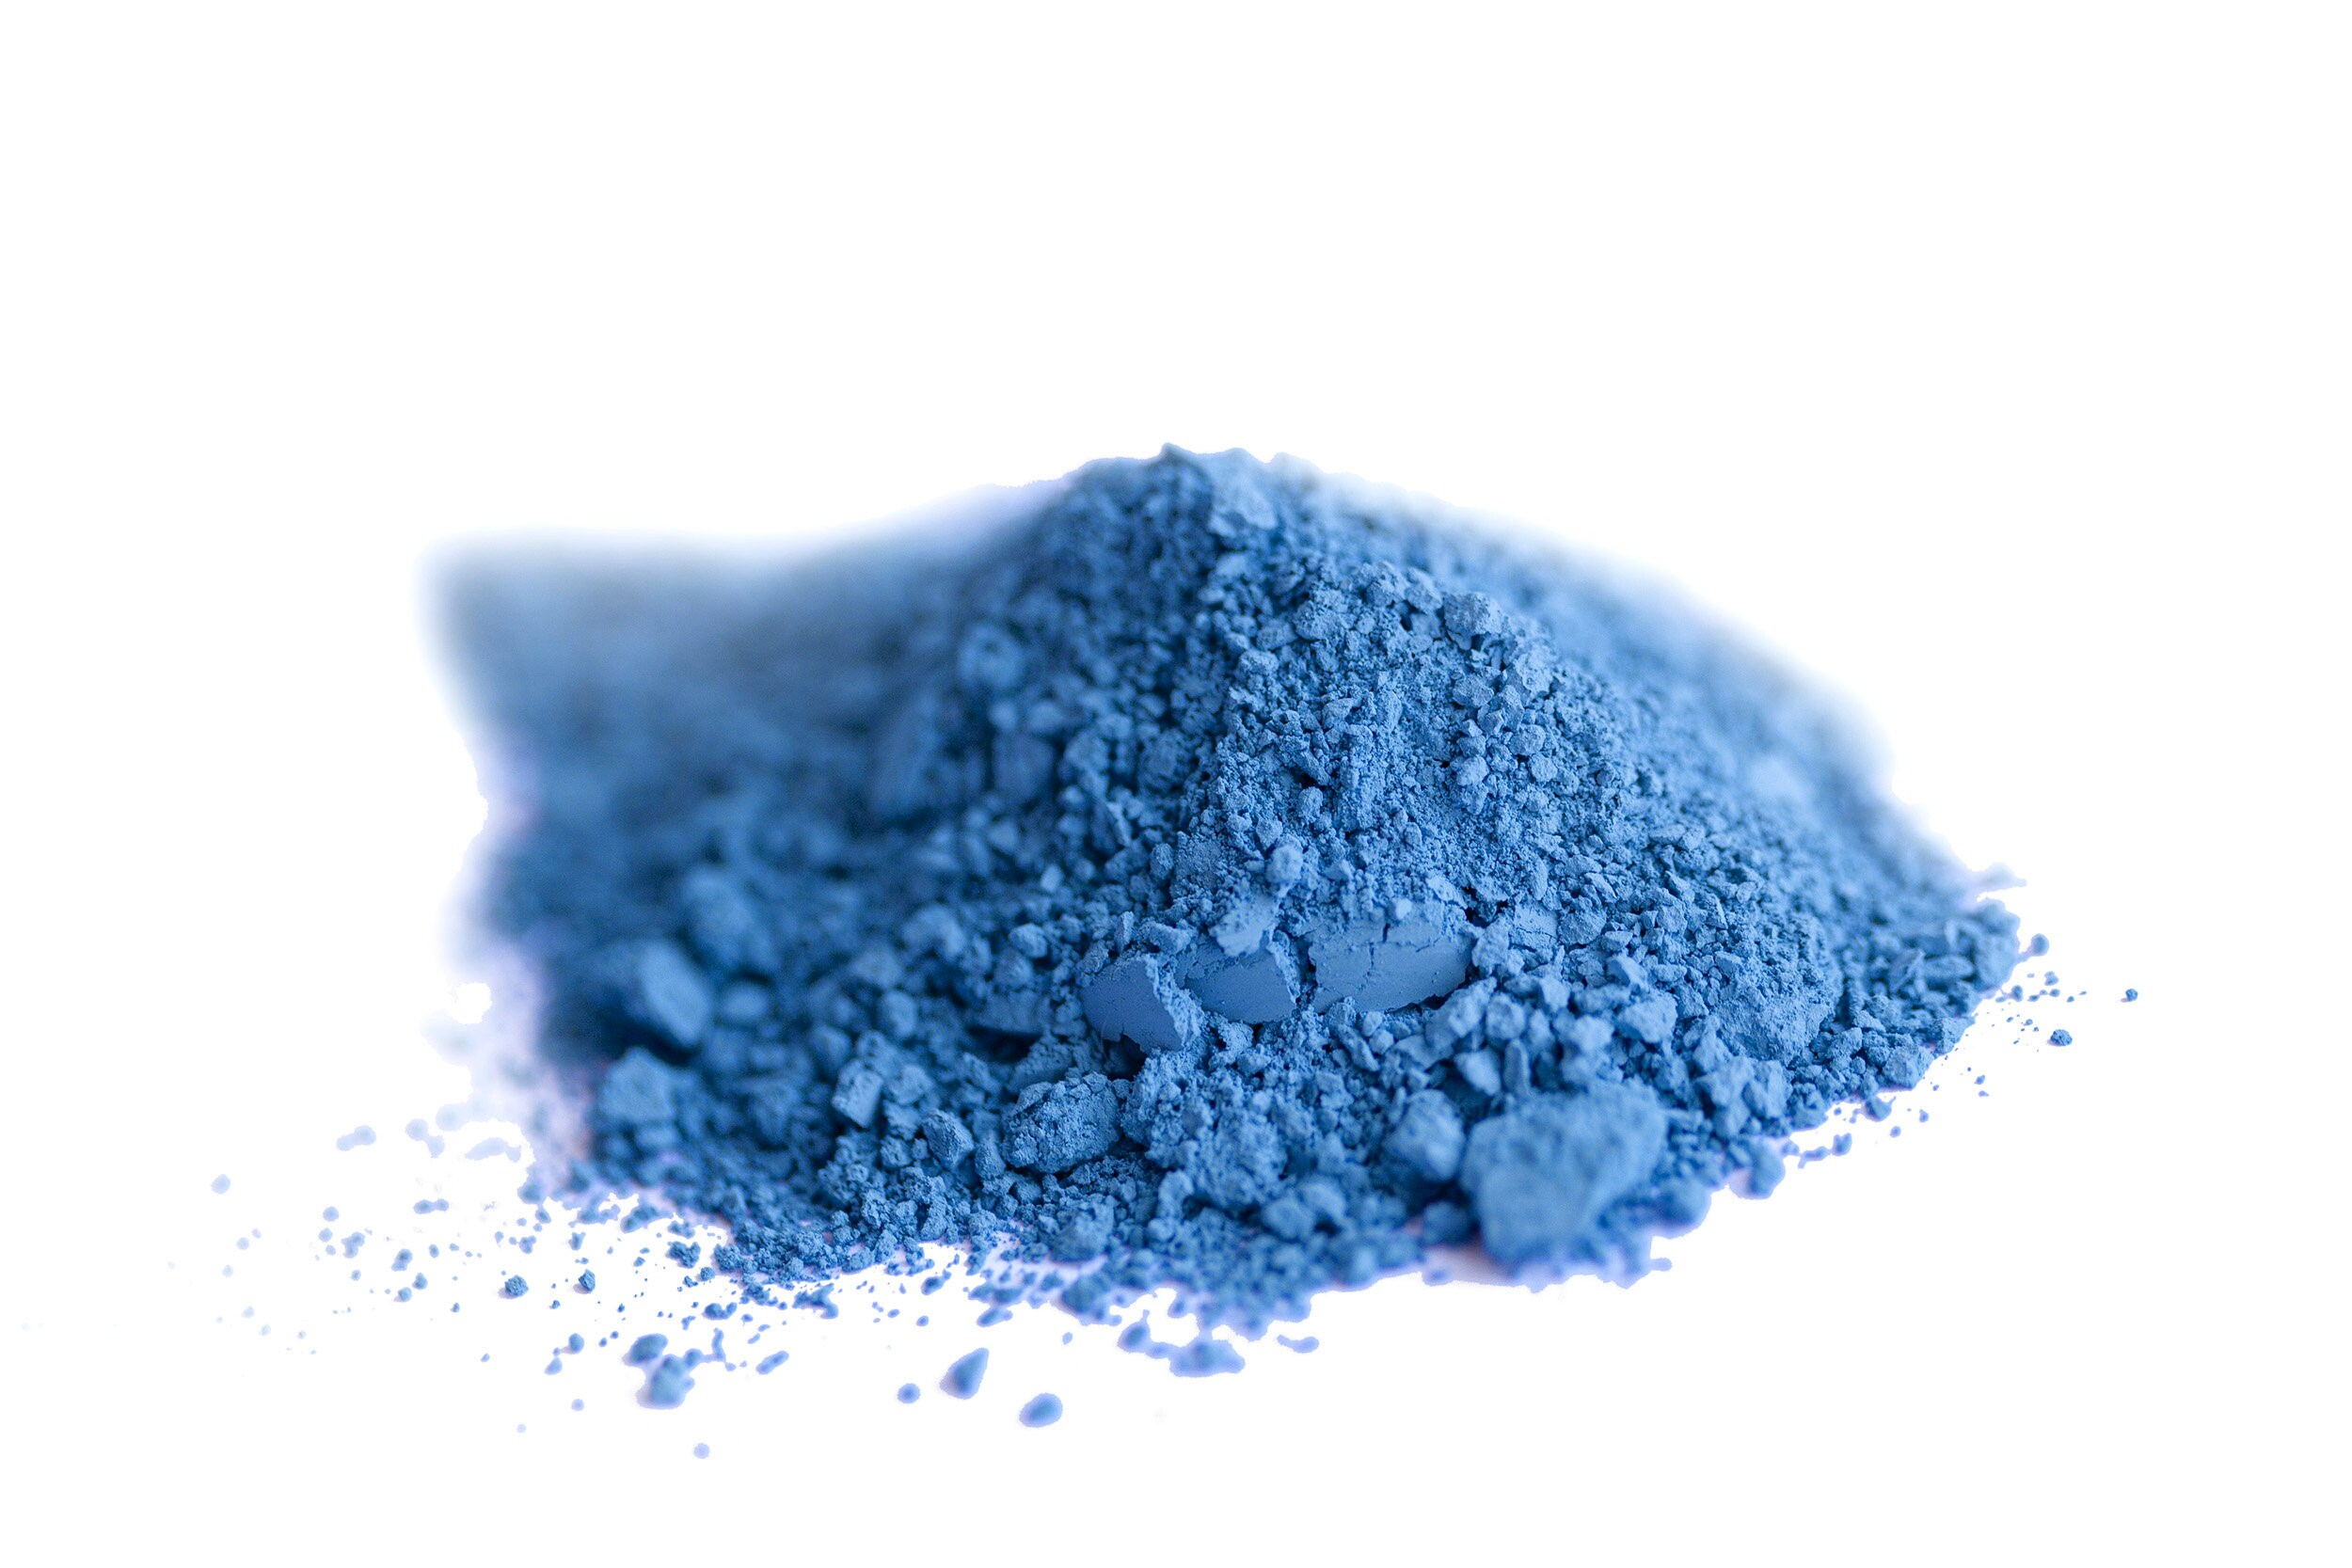 Ultramarine Blue Pigment Oxide Mineral Powder - 25g